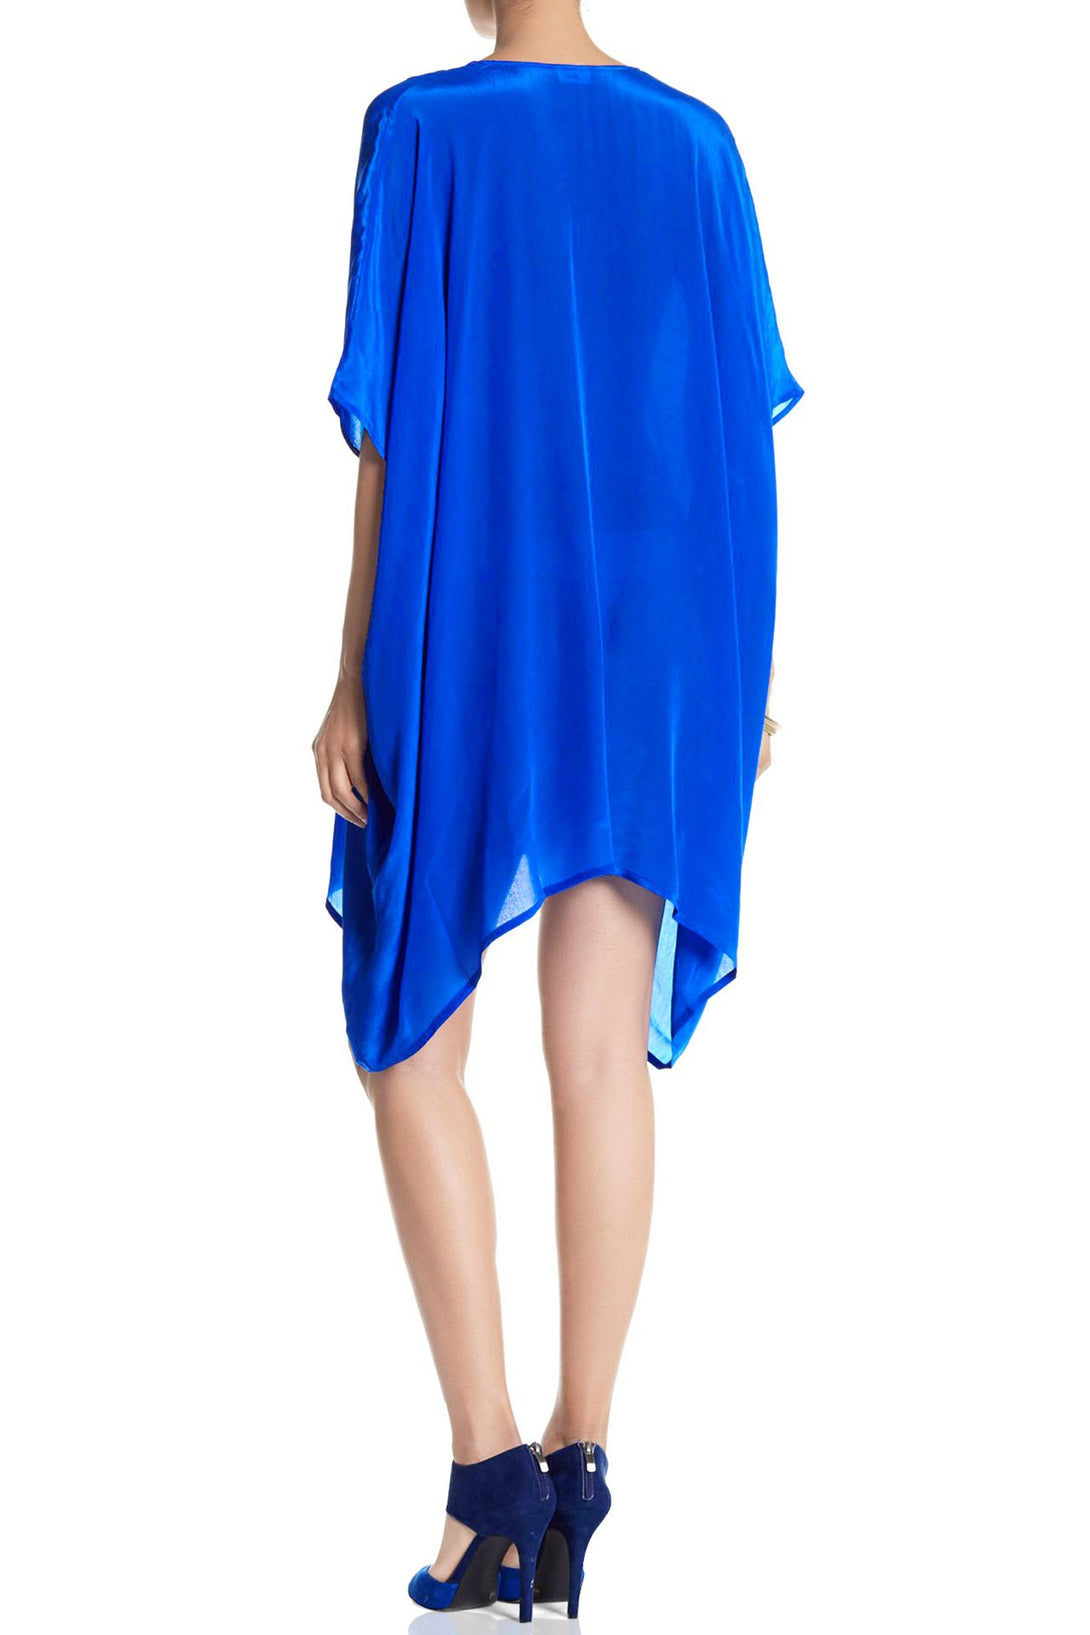  mini dress blue, Shahida Parides, silk caftans,short sleeveless summer dresses, cute mini dresses,